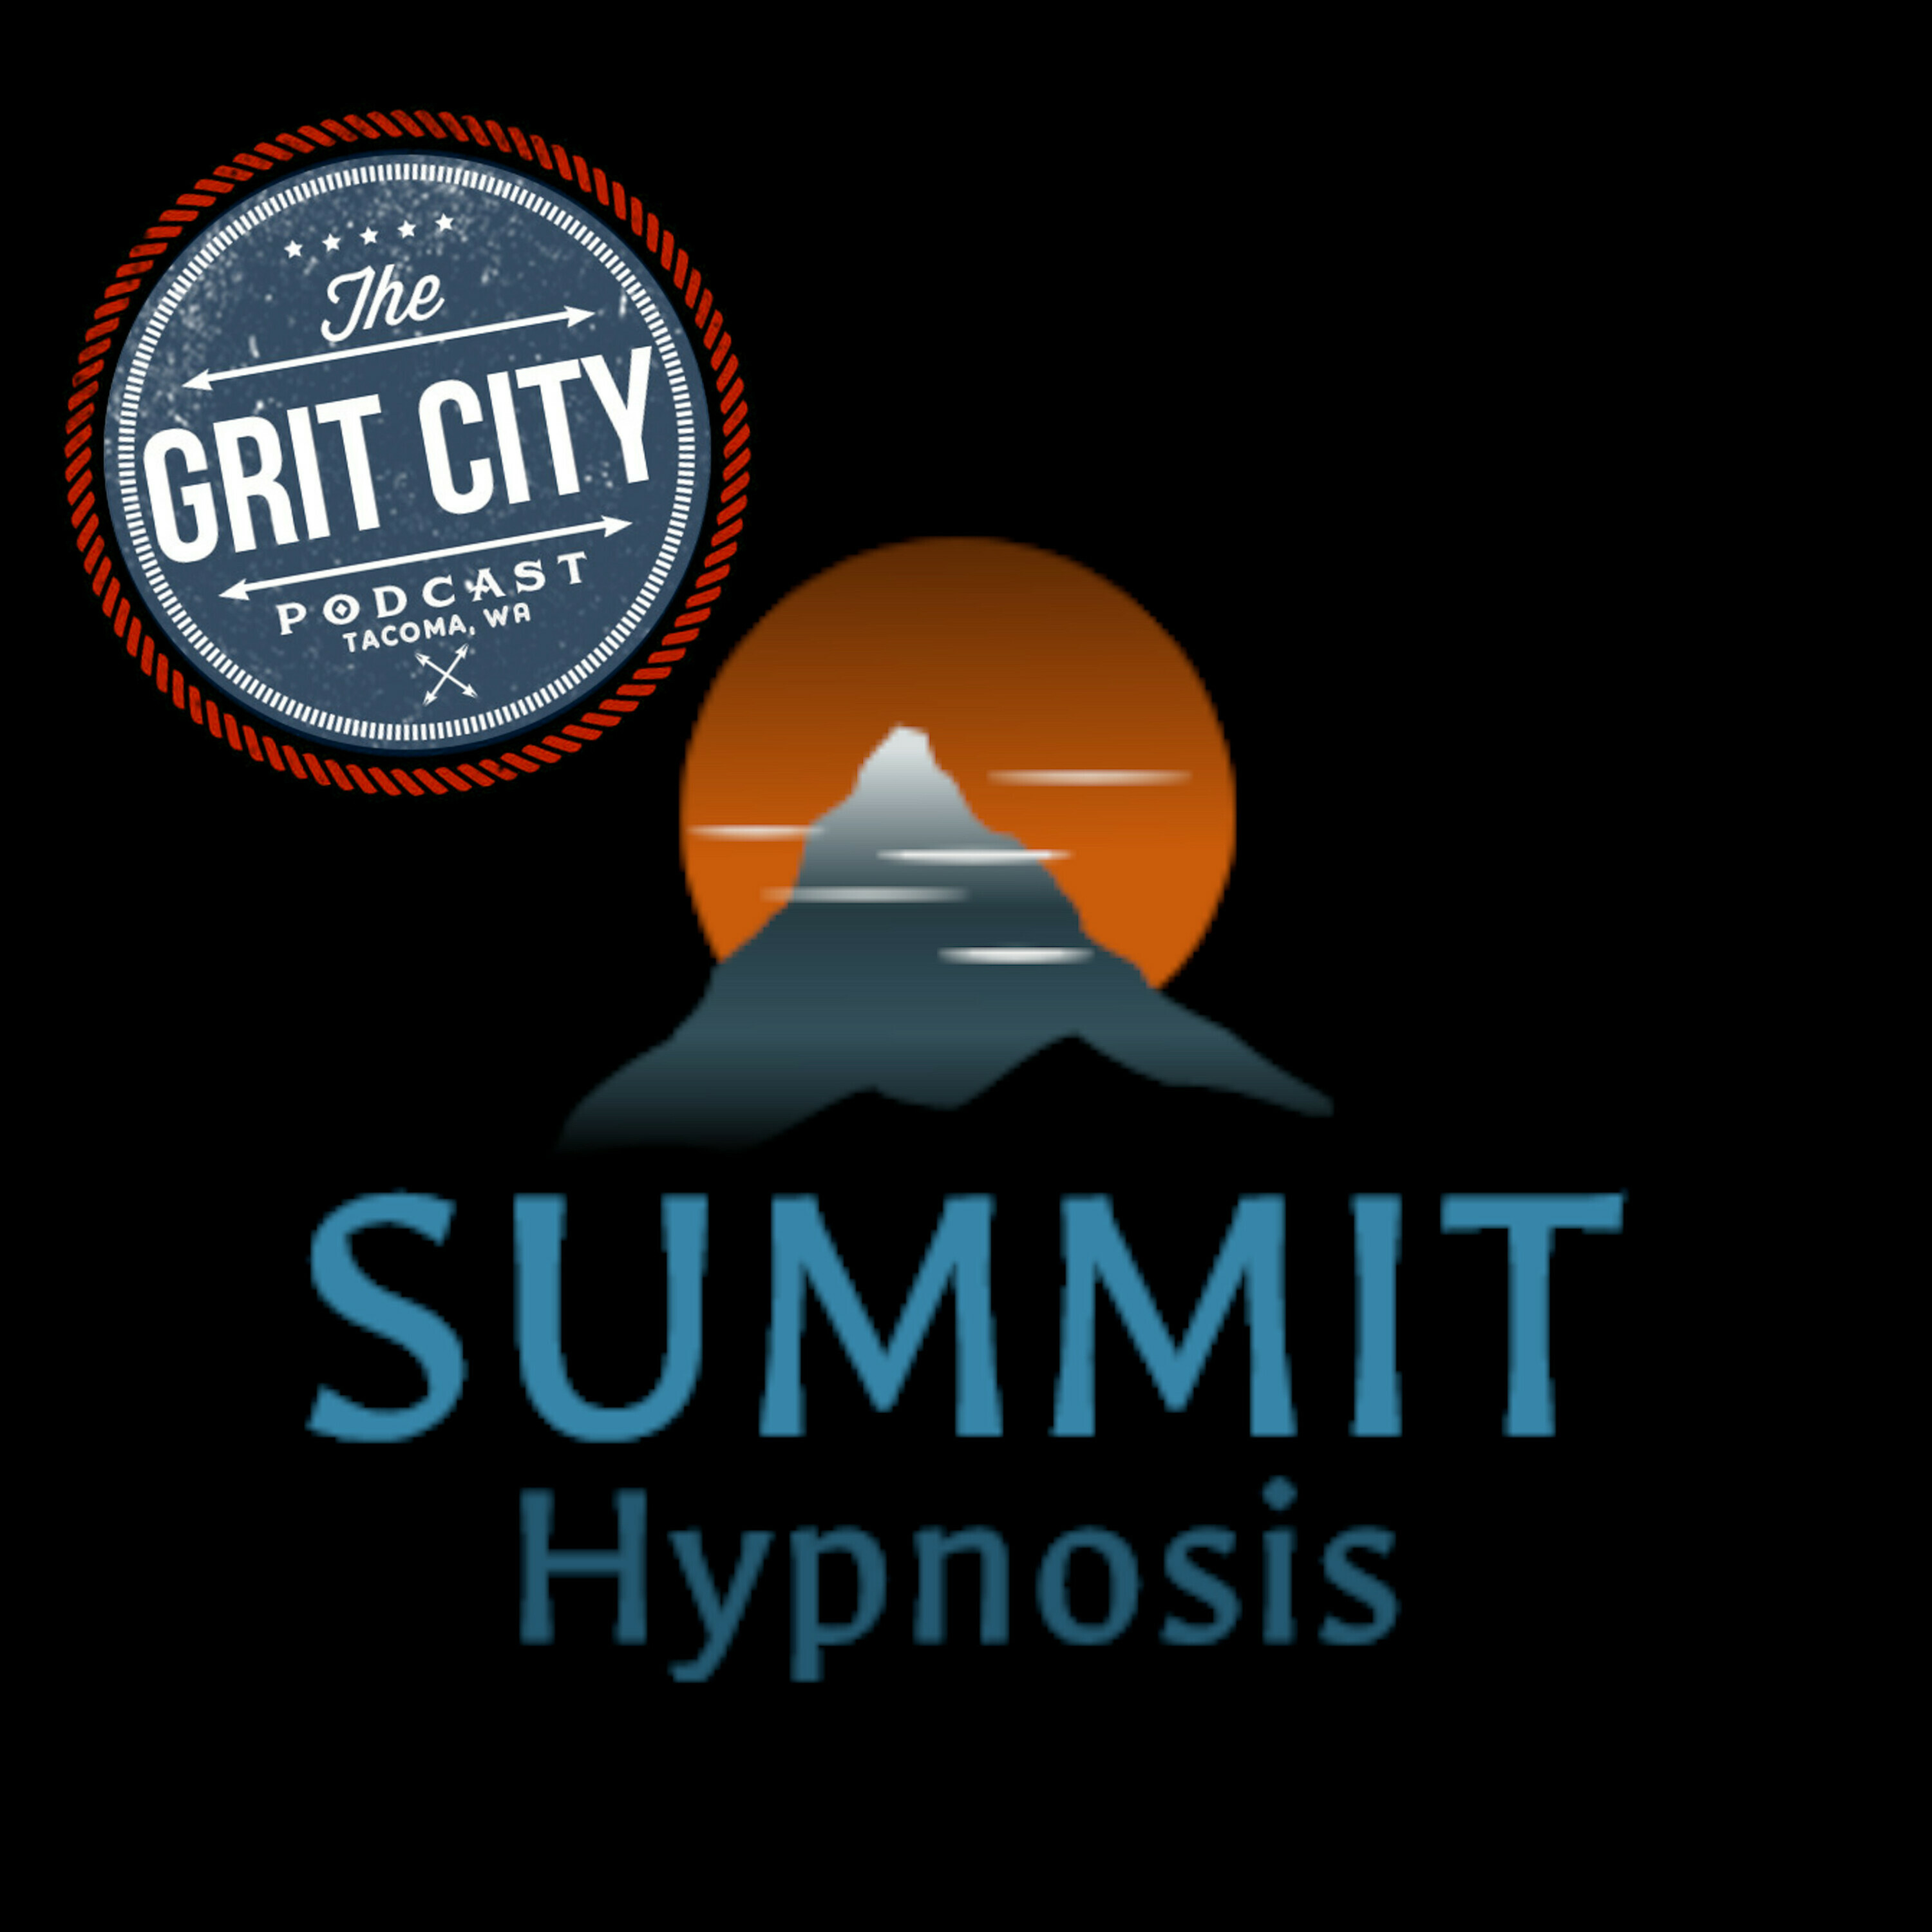 Summit Hypnosis